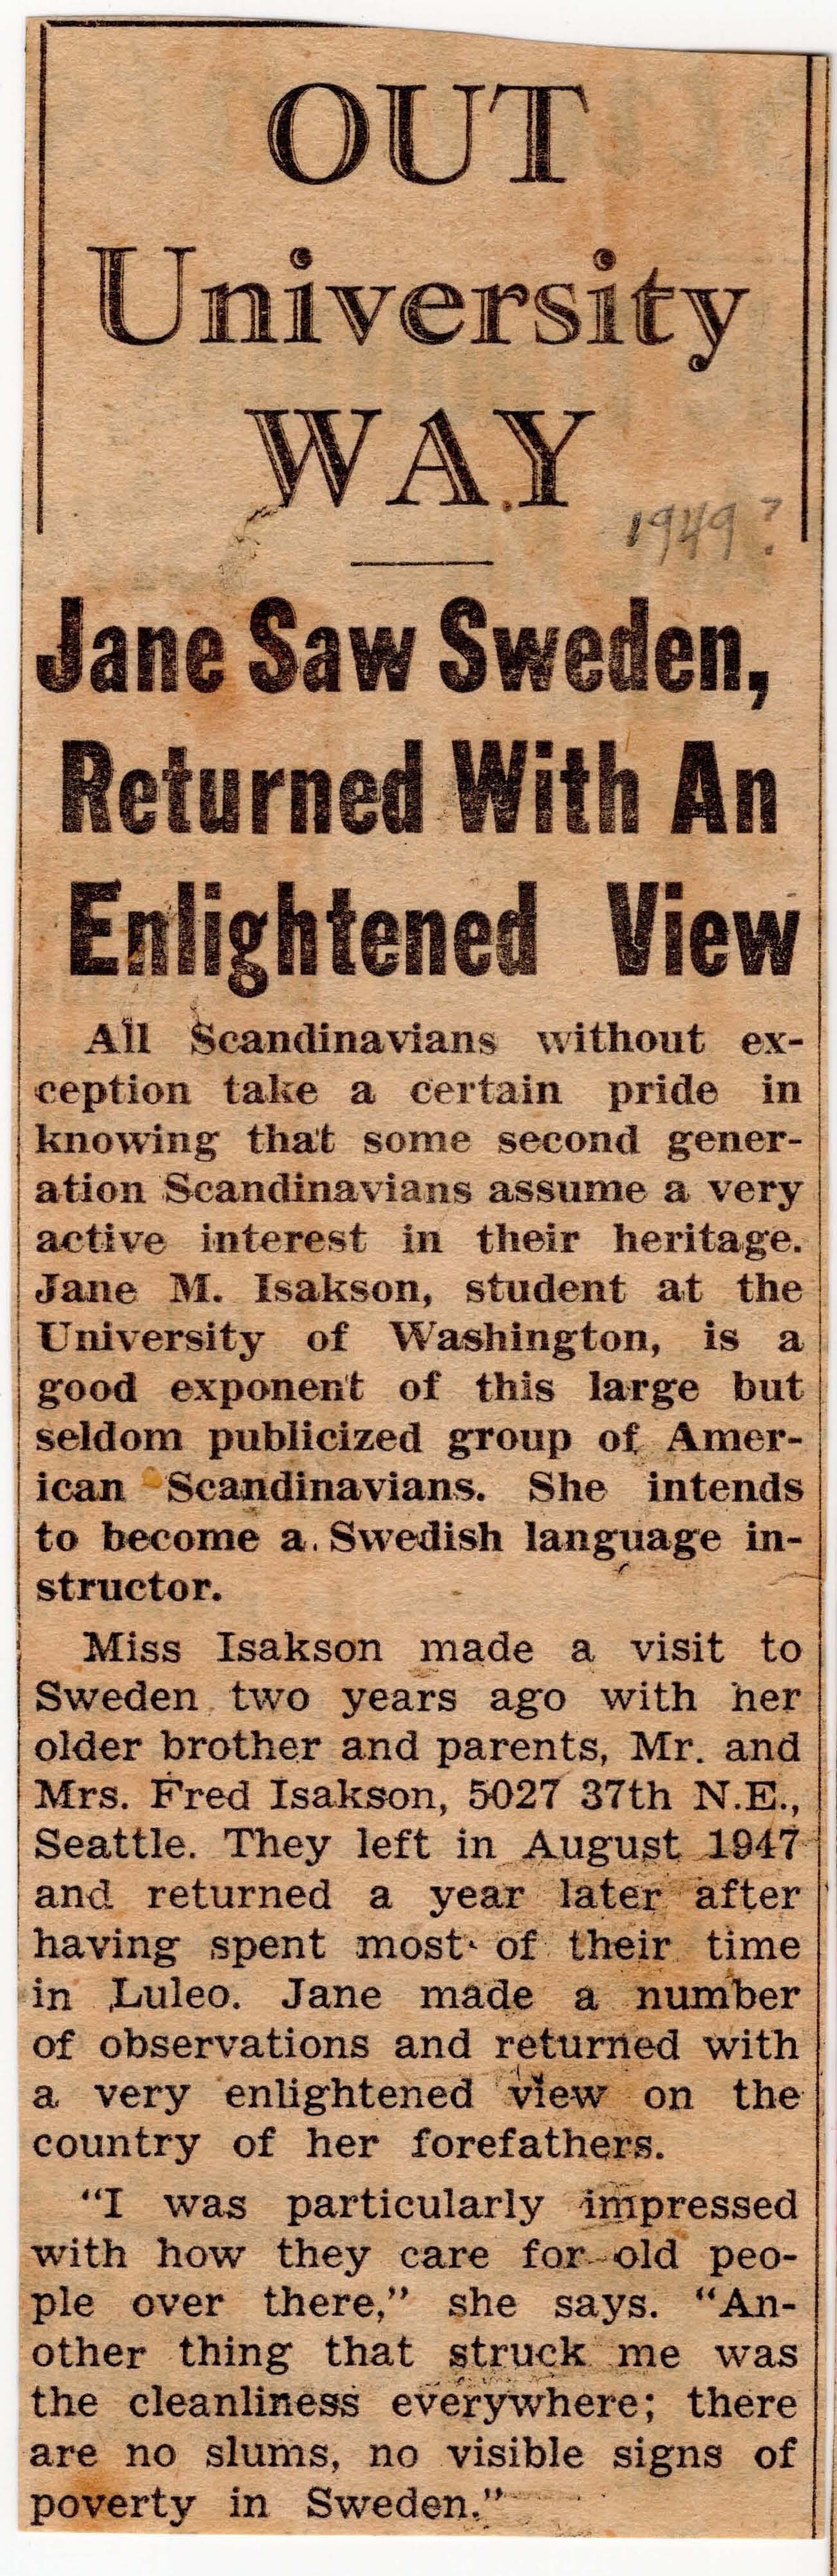 Jane Saw Sweden